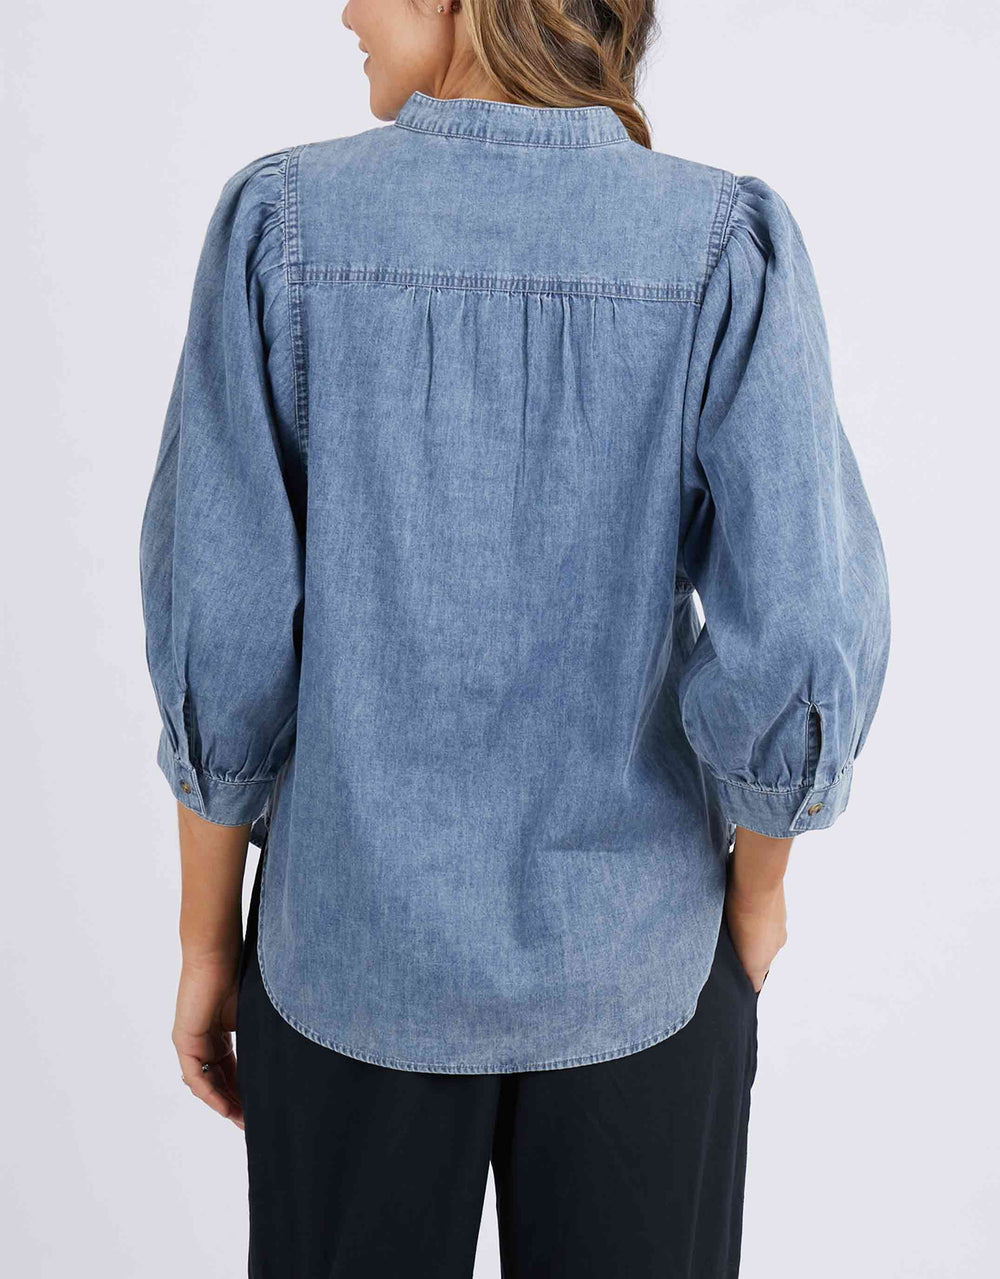 elm-sophie-half-button-shirt-mid-blue-wash-womens-clothing